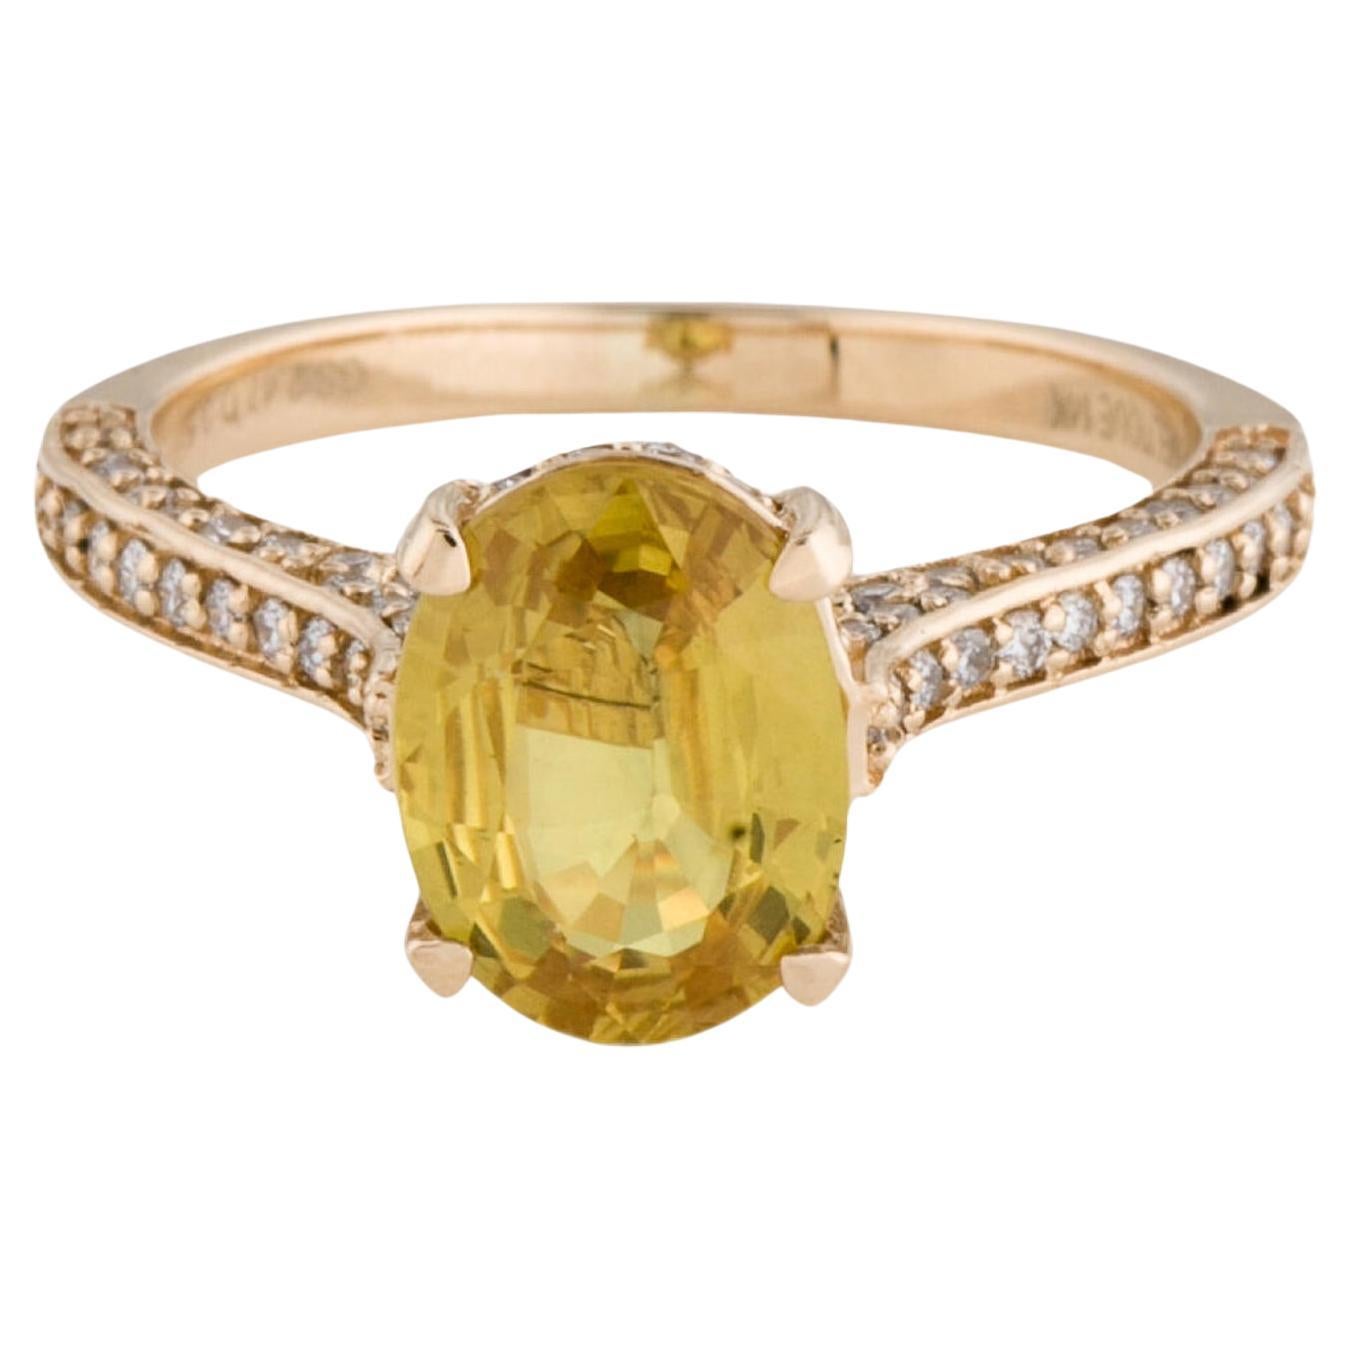 Stunning 14K Sapphire & Diamond Ring - 2.19ct - Size 6.75  Luxurious Jewelry